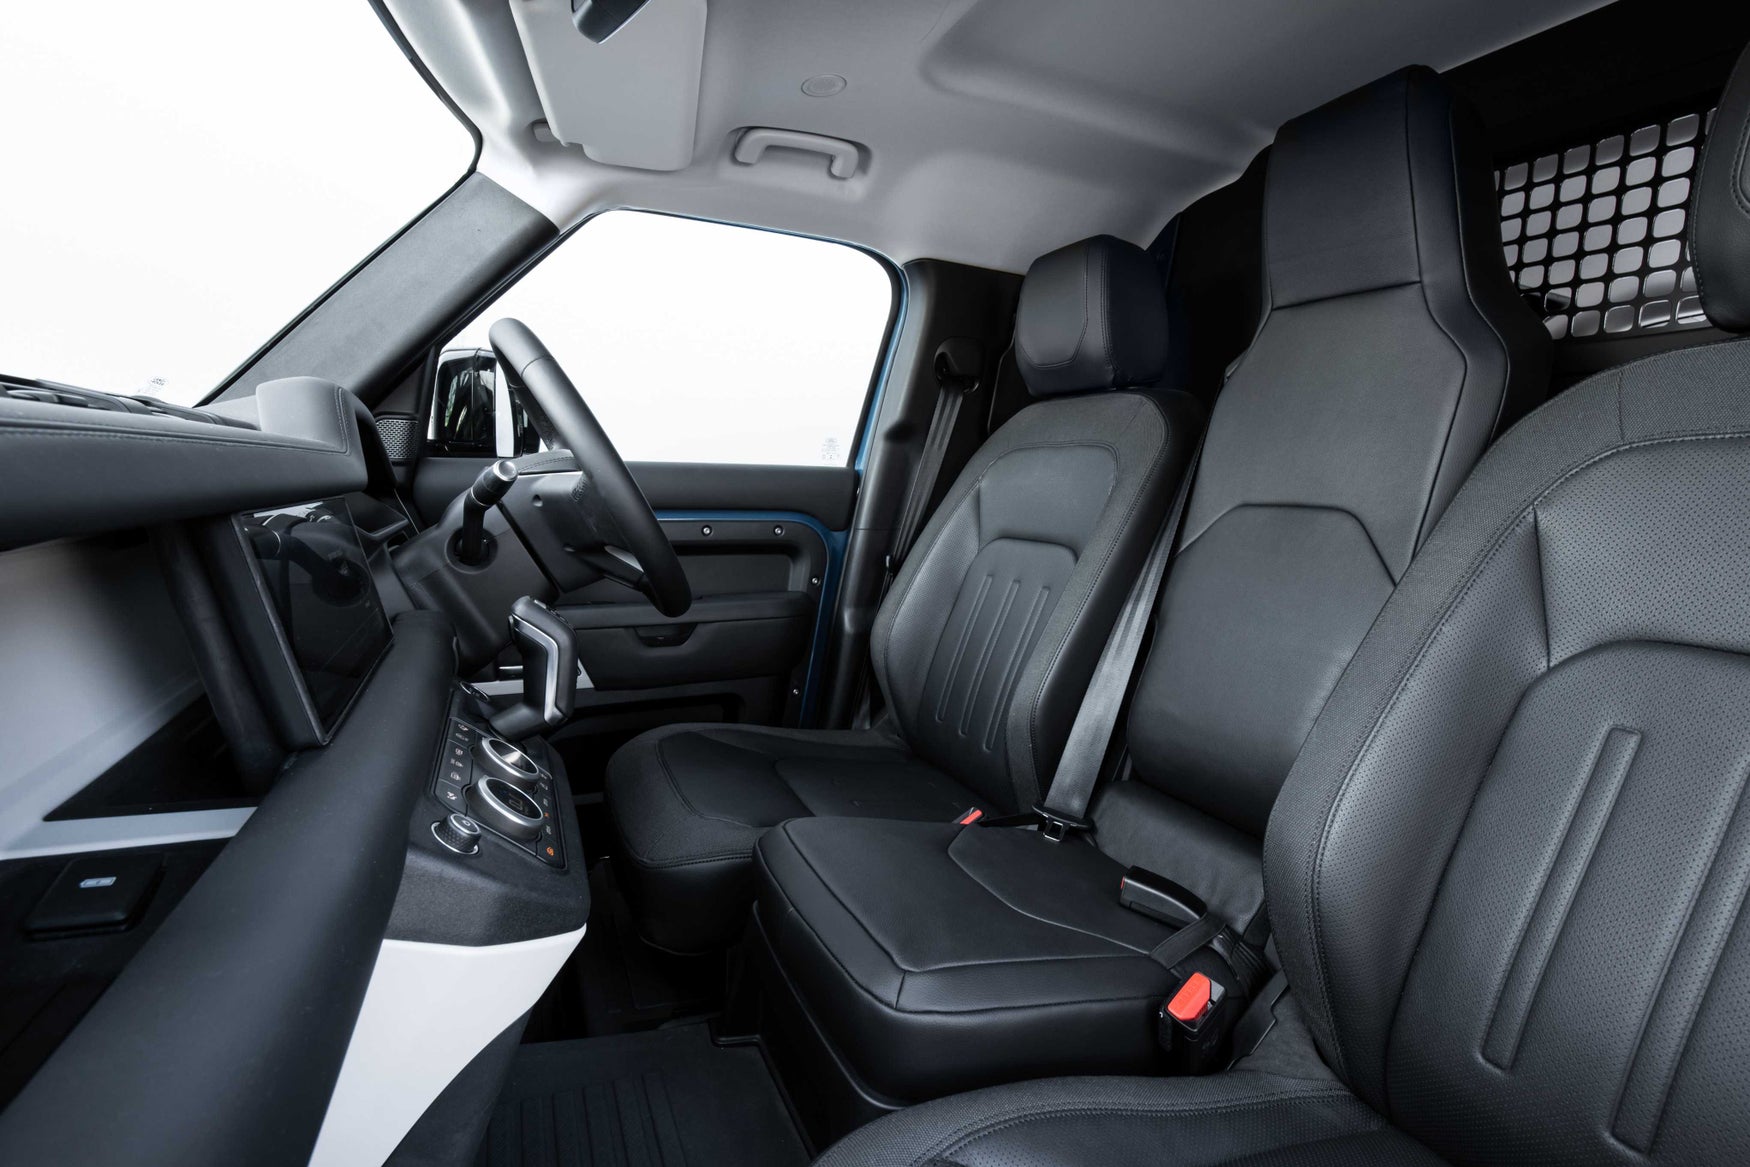 Land Rover Defender 110 Hard Top interior